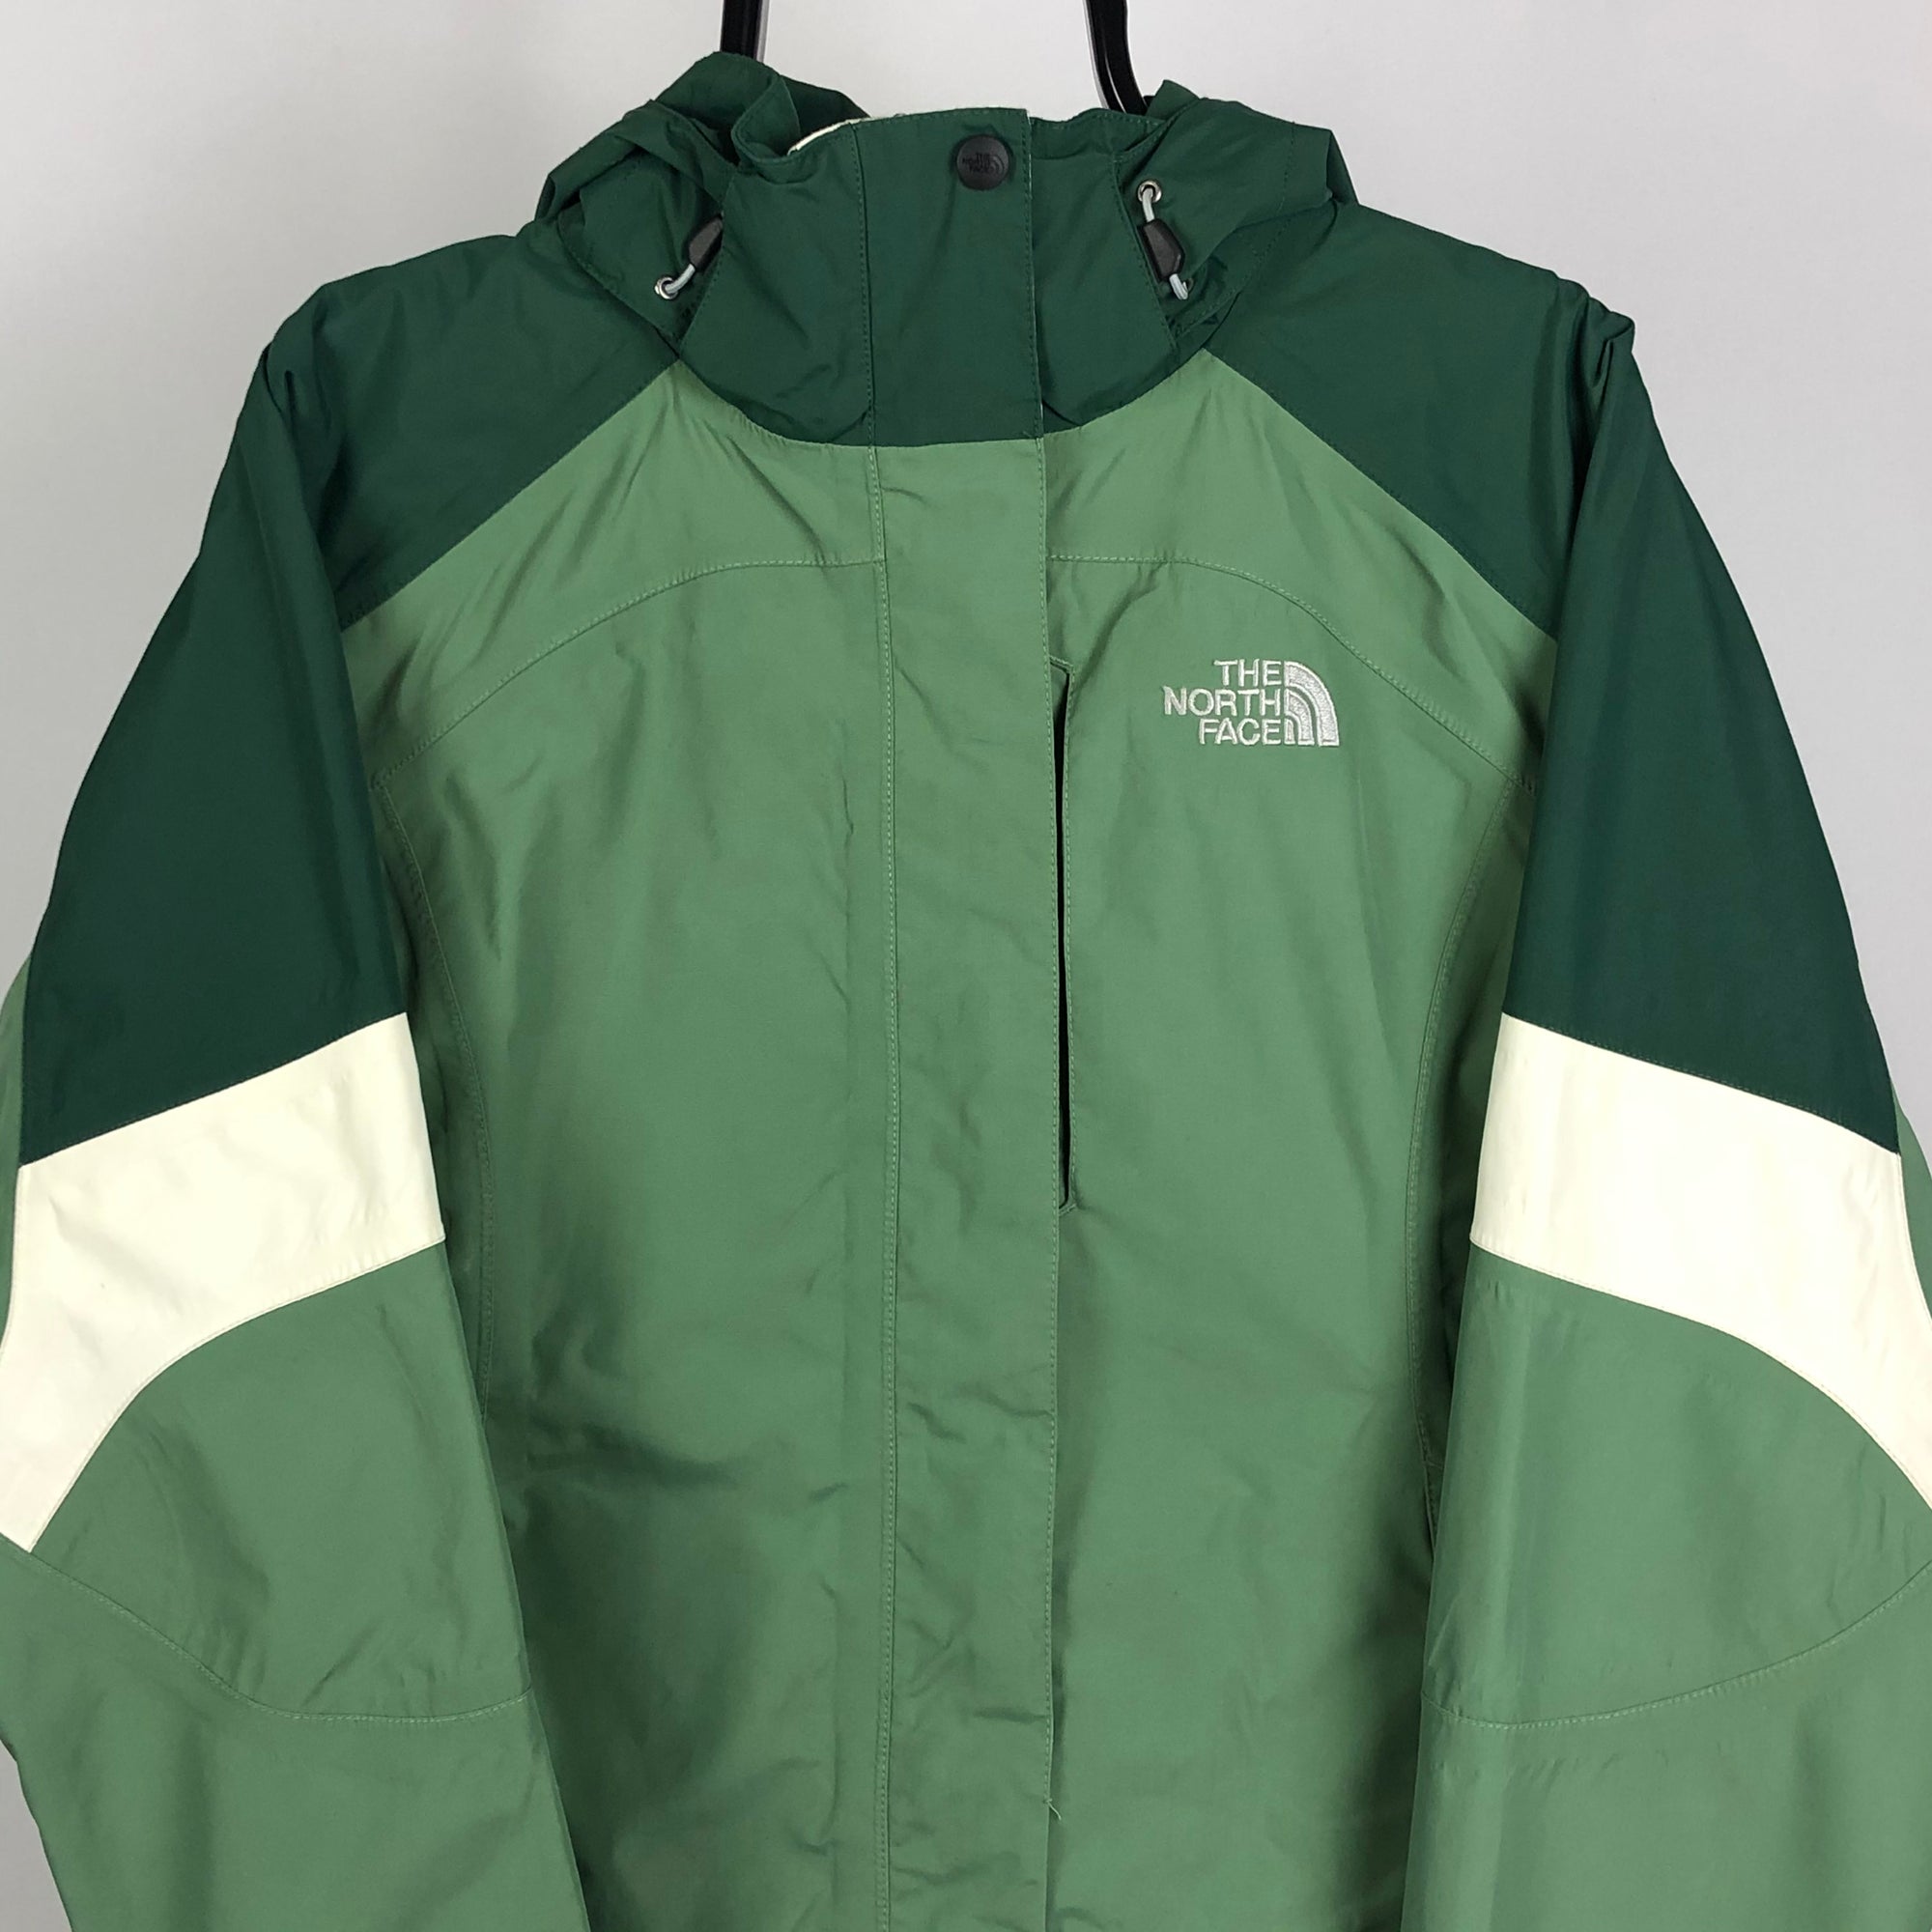 North Face HyVent Waterproof Jacket in Green - Men's Small/Women's Medium